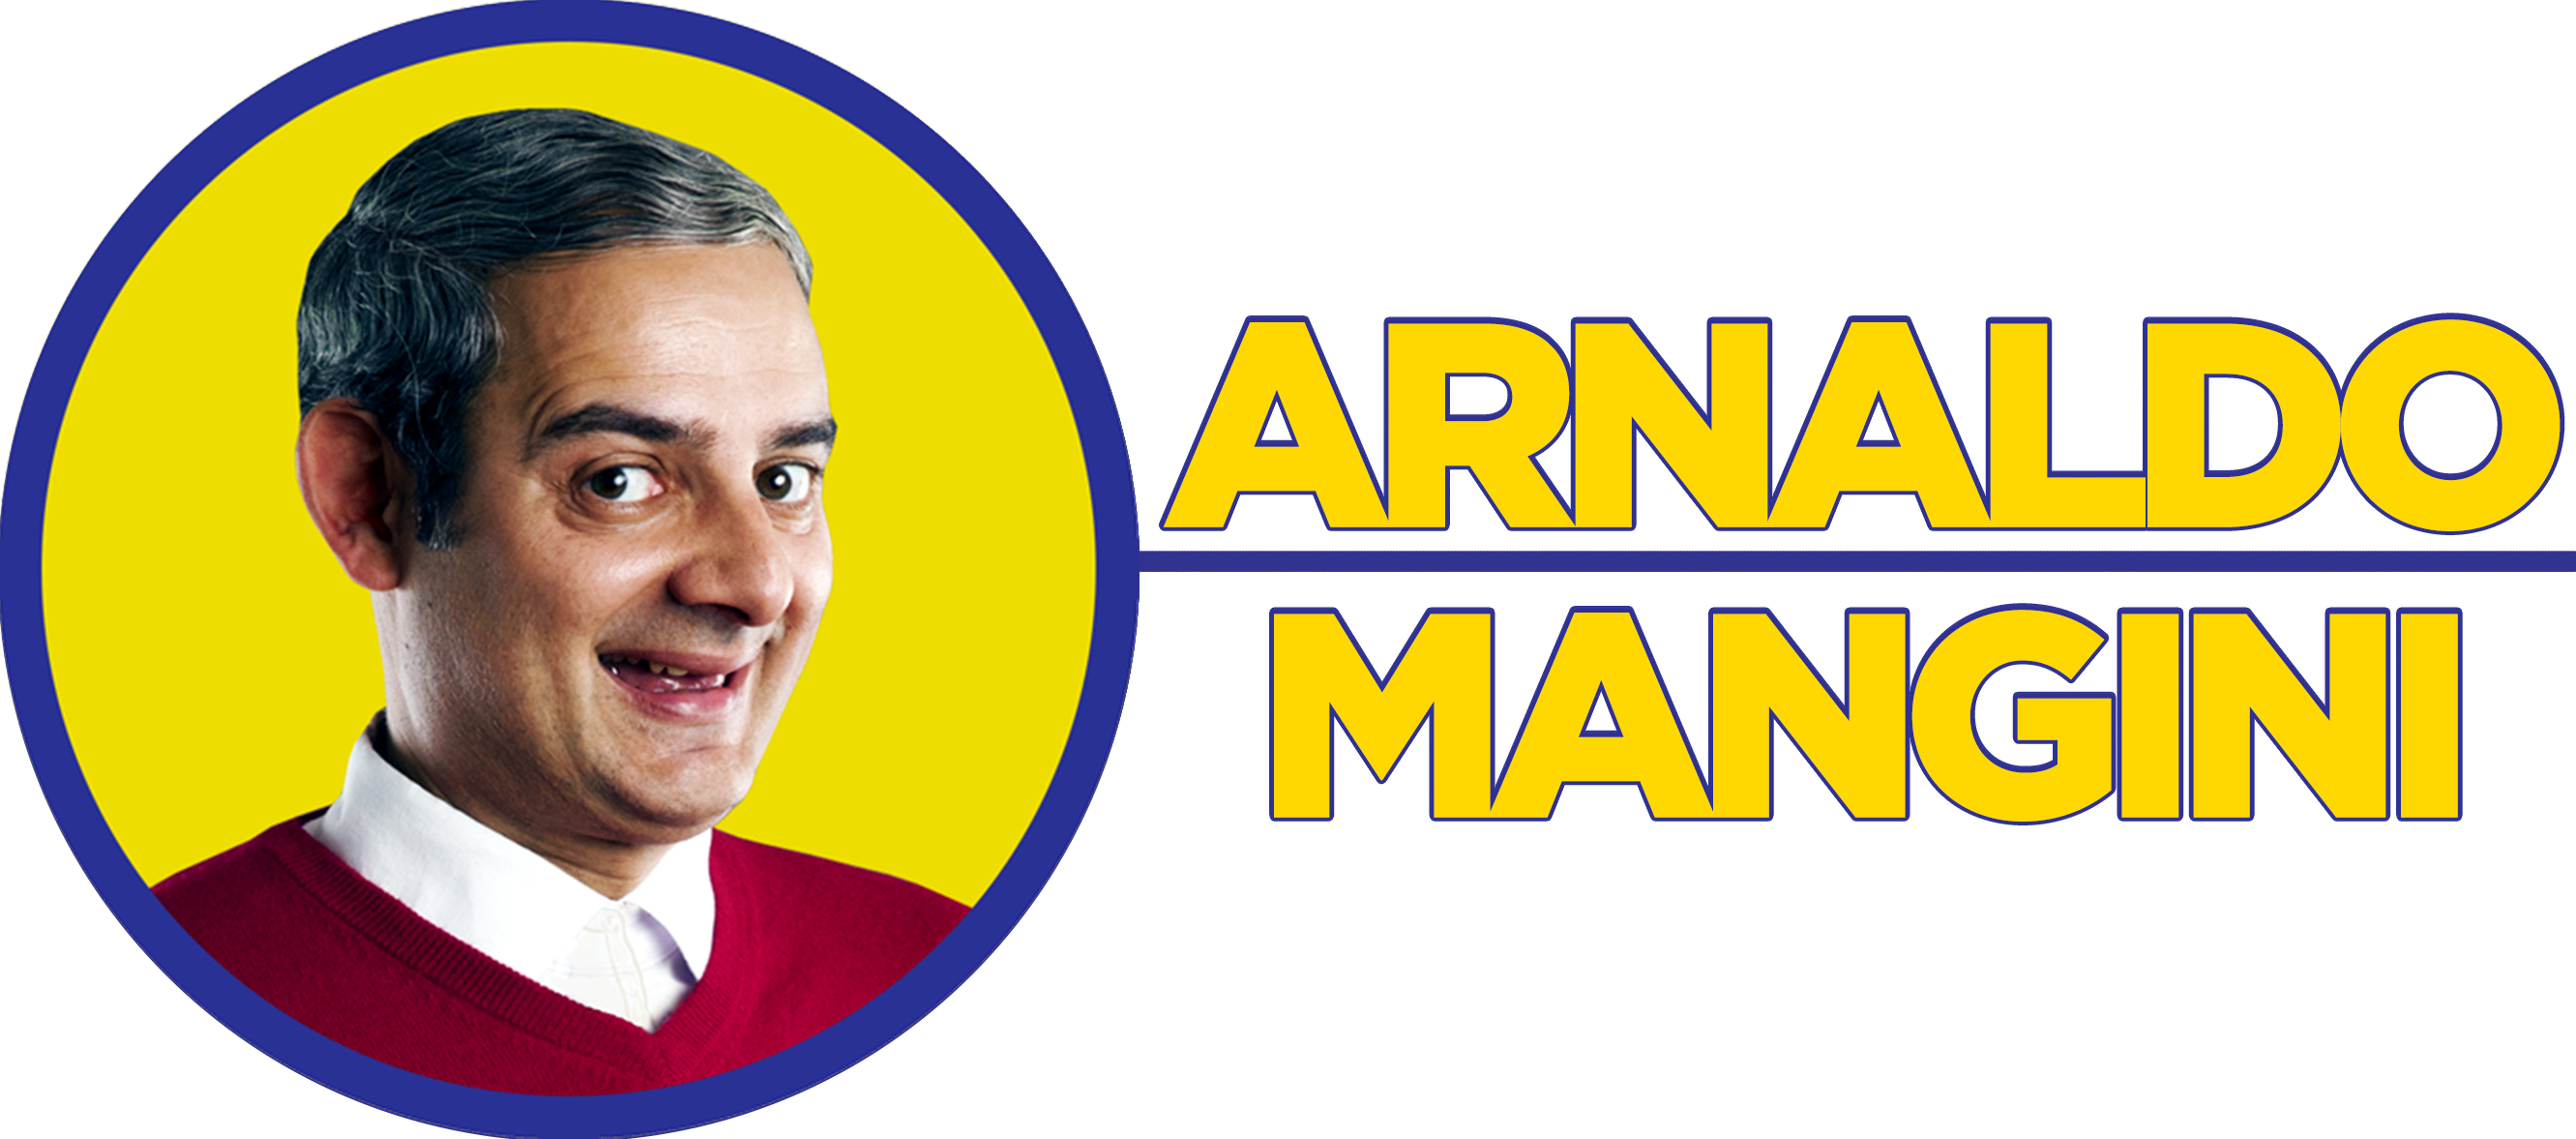 Spettacolo - Arnaldo Mangini Clown Actor / Content Creator